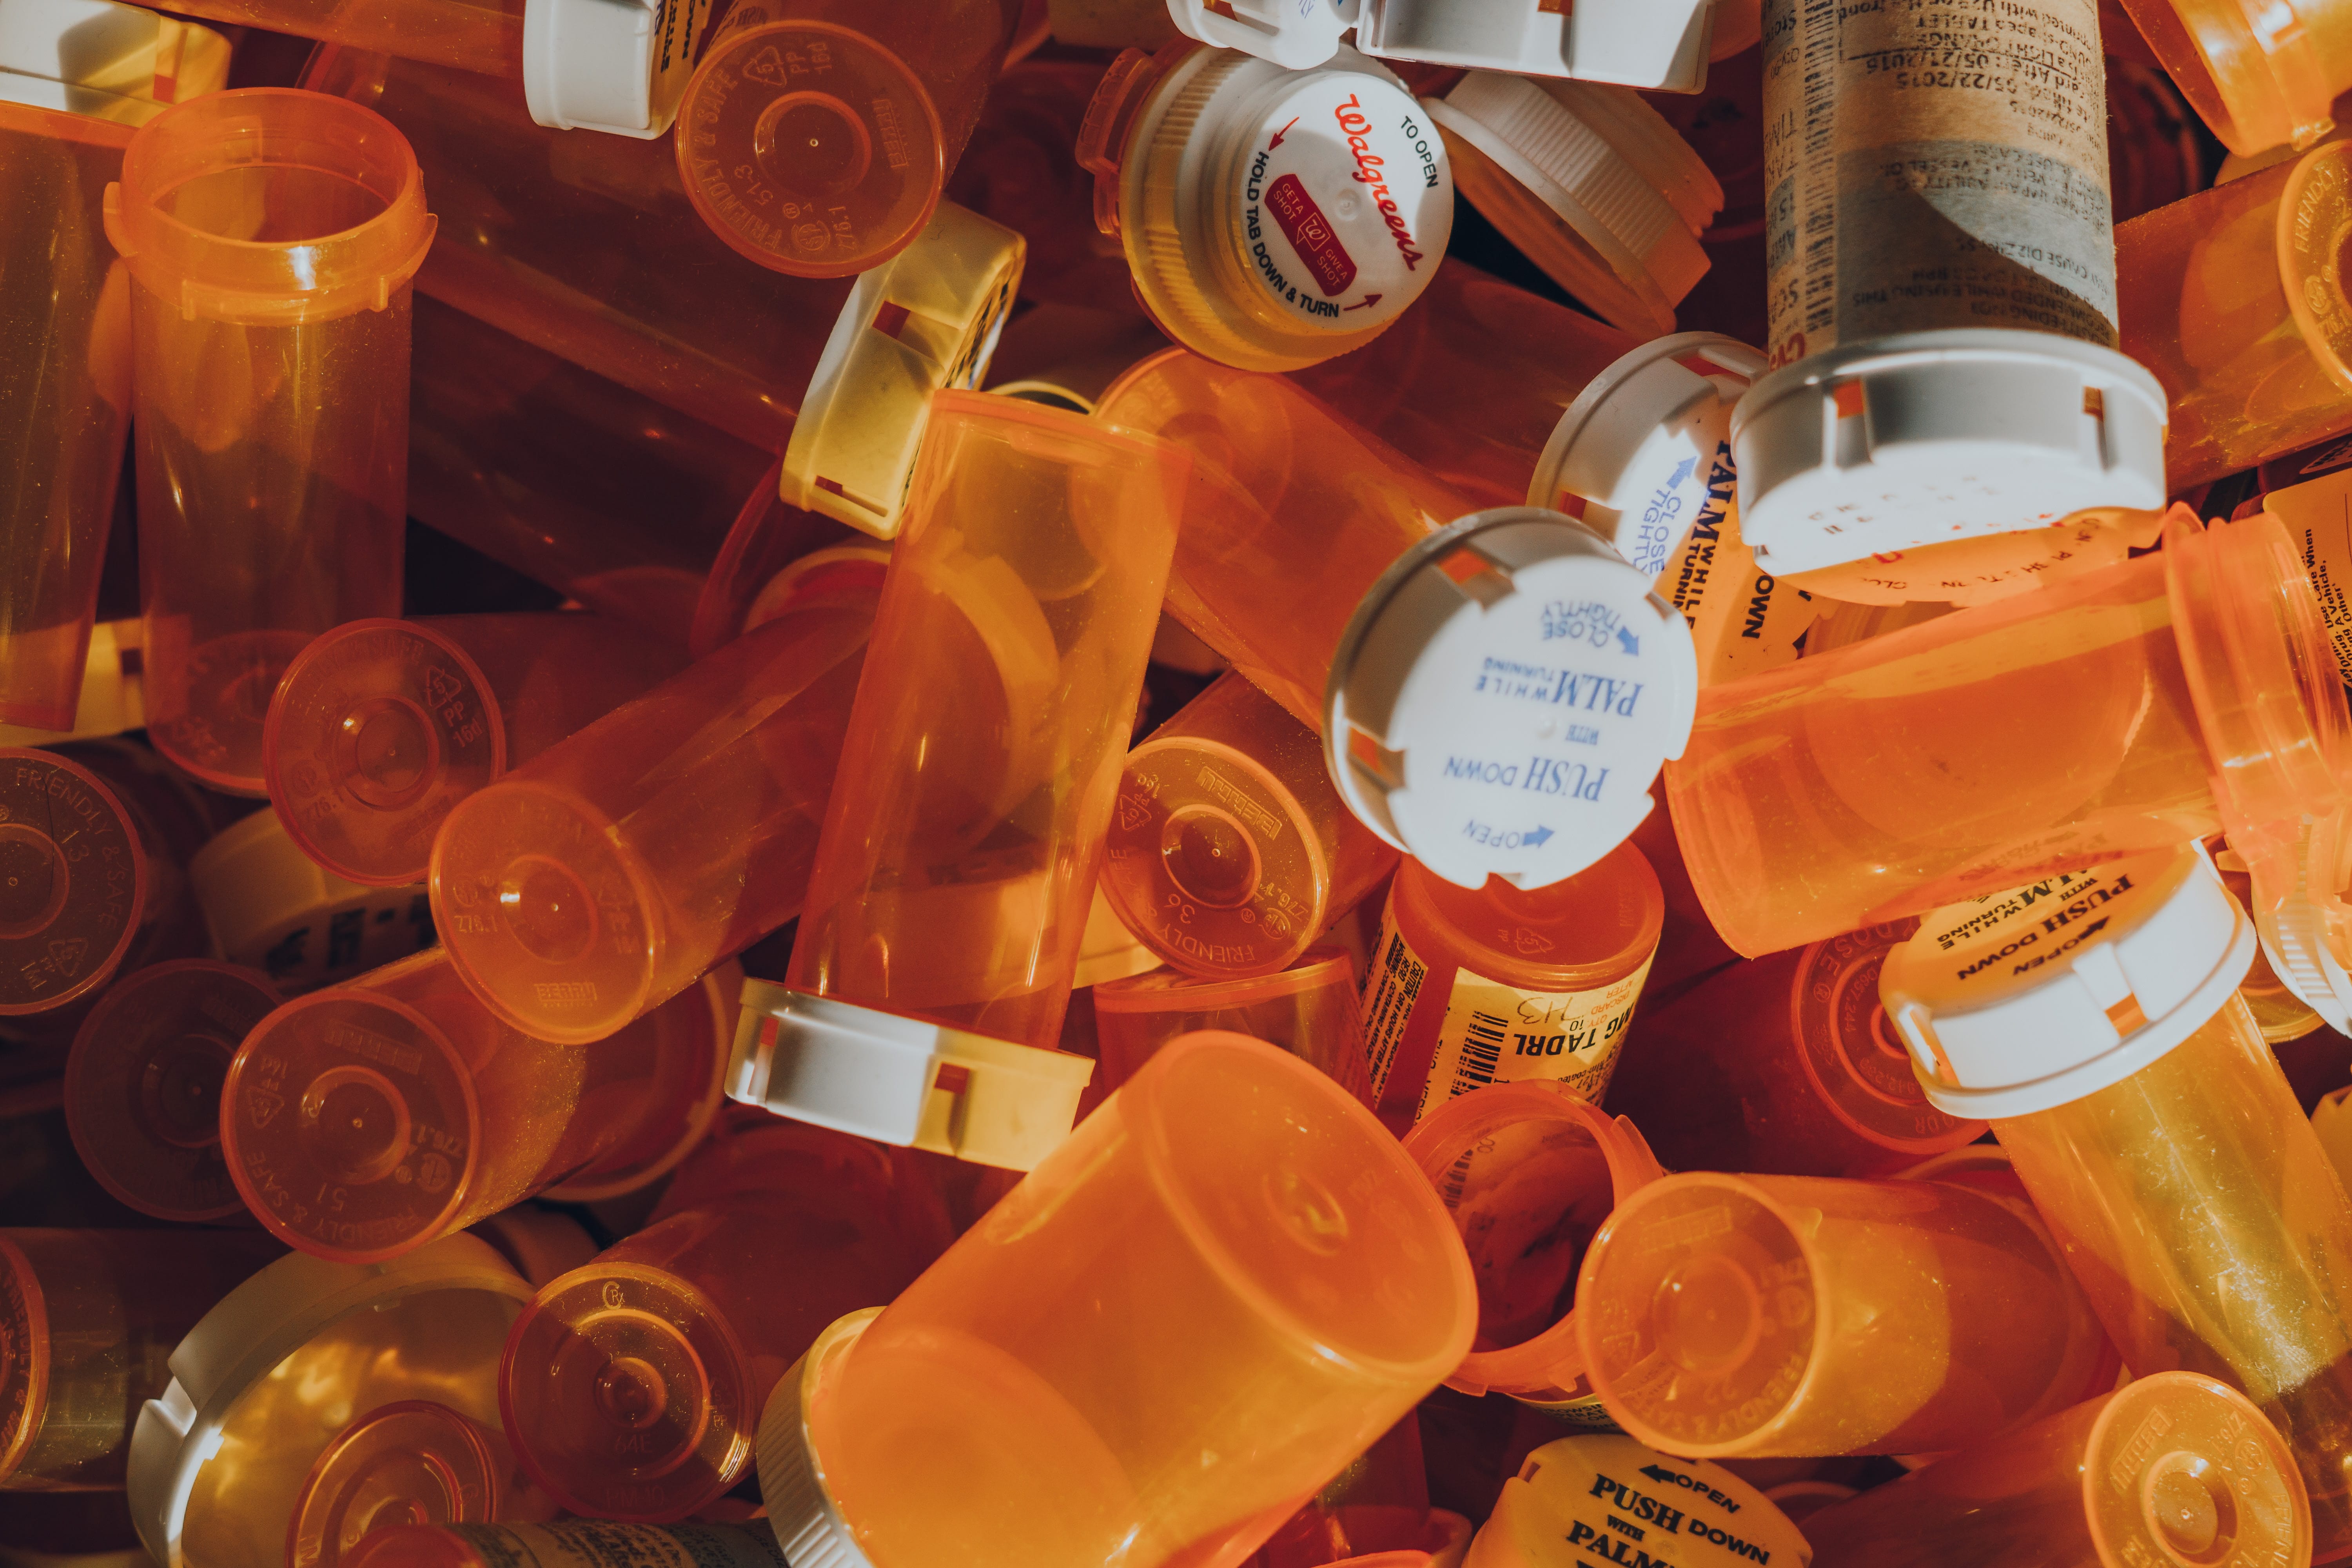 A pile of empty orange prescription bottles; image by Haley Lawrence, via unsplash.com.